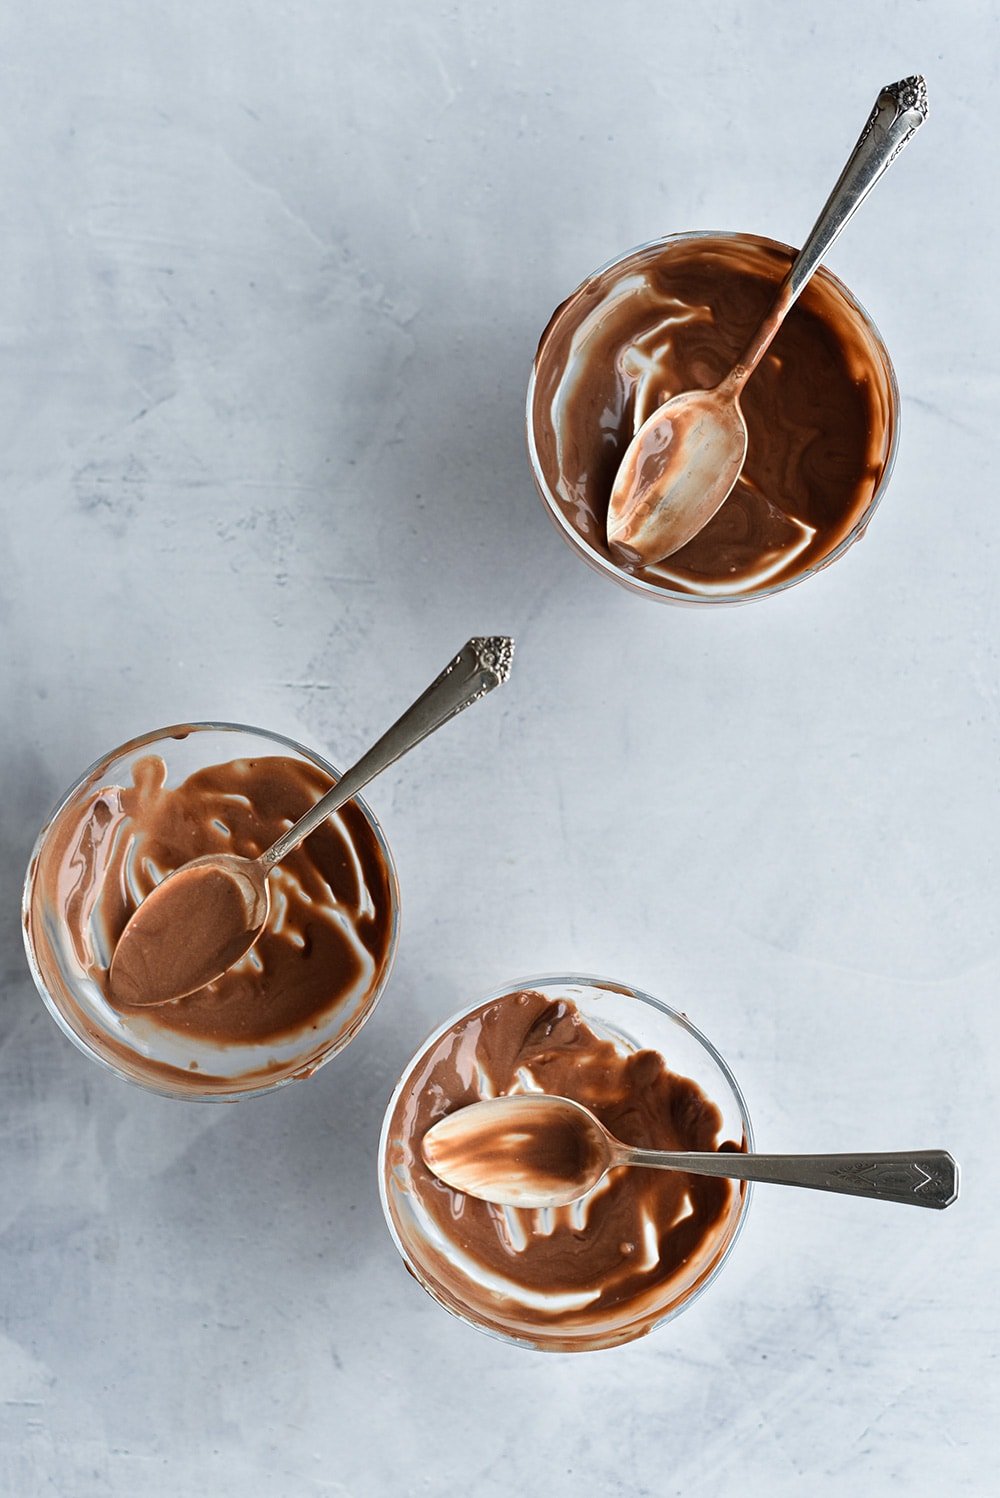 empty bowls of chocolate ice cream